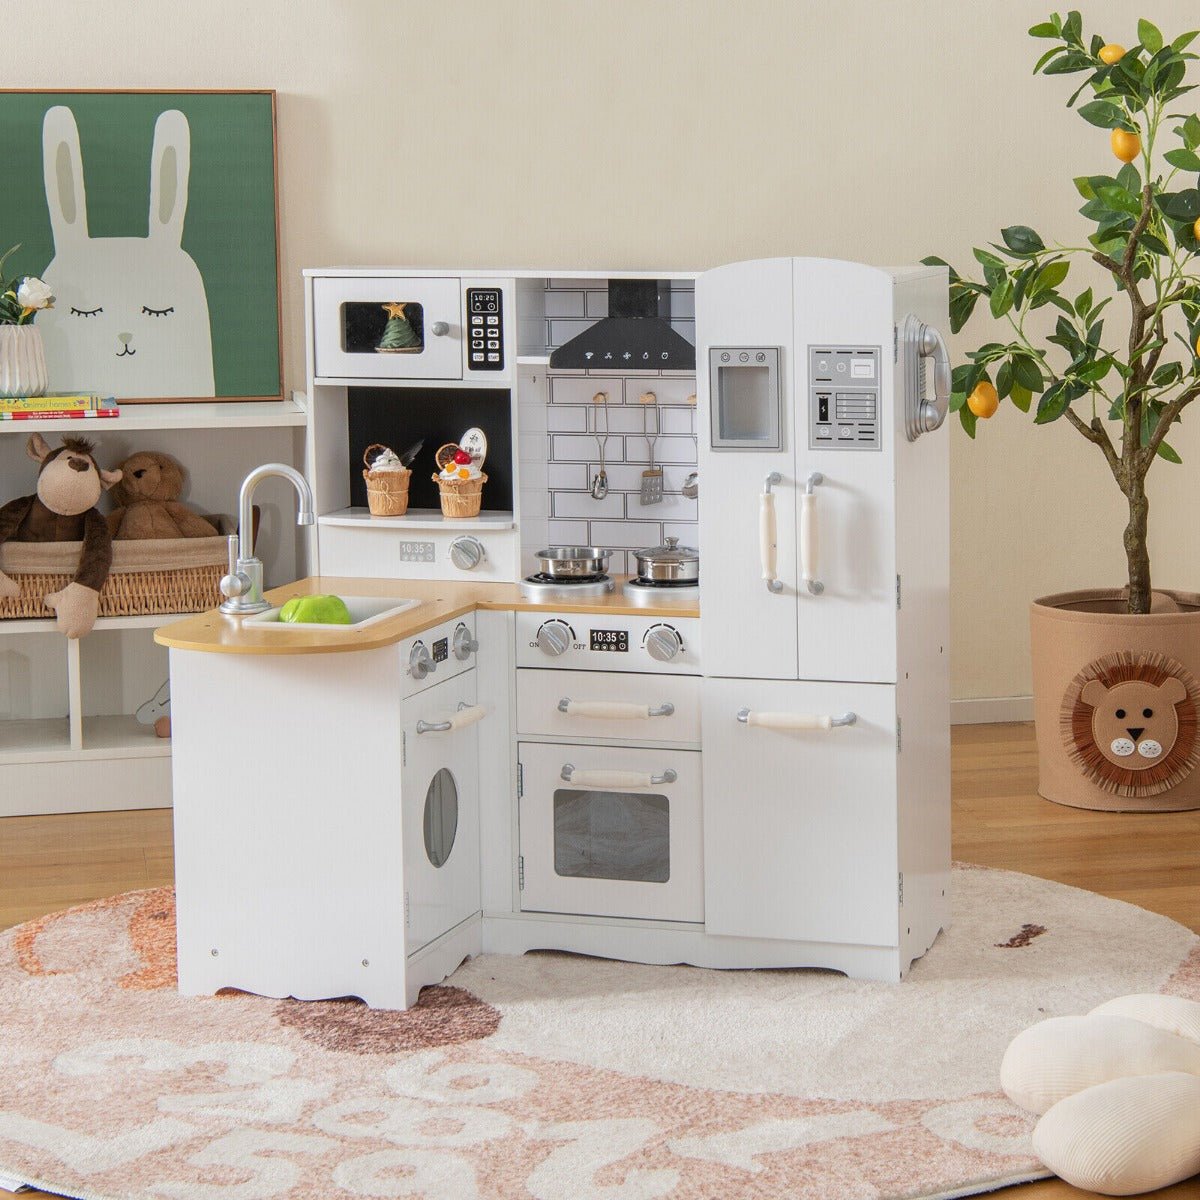 Shop Now: White Wooden Play Kitchen for Kids at Kids Mega Mart